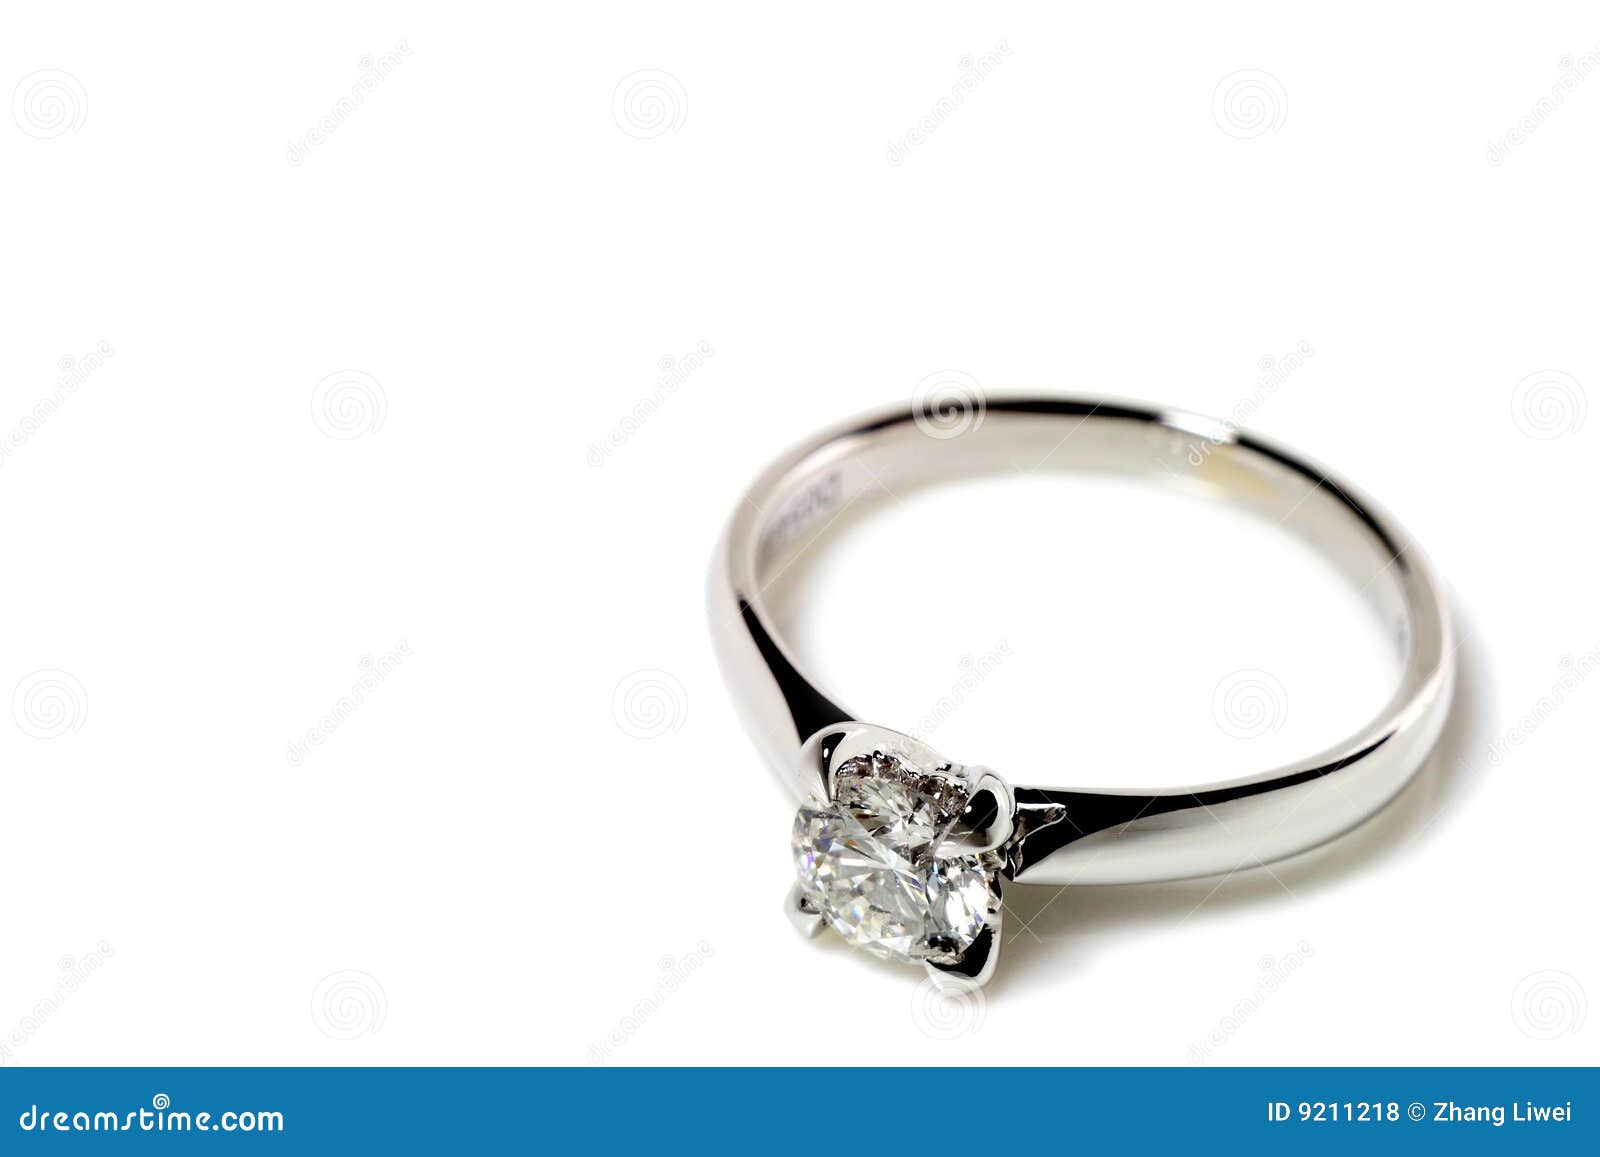 Diamond Ring stock photo. Image of matrimony, jewelry - 9211218